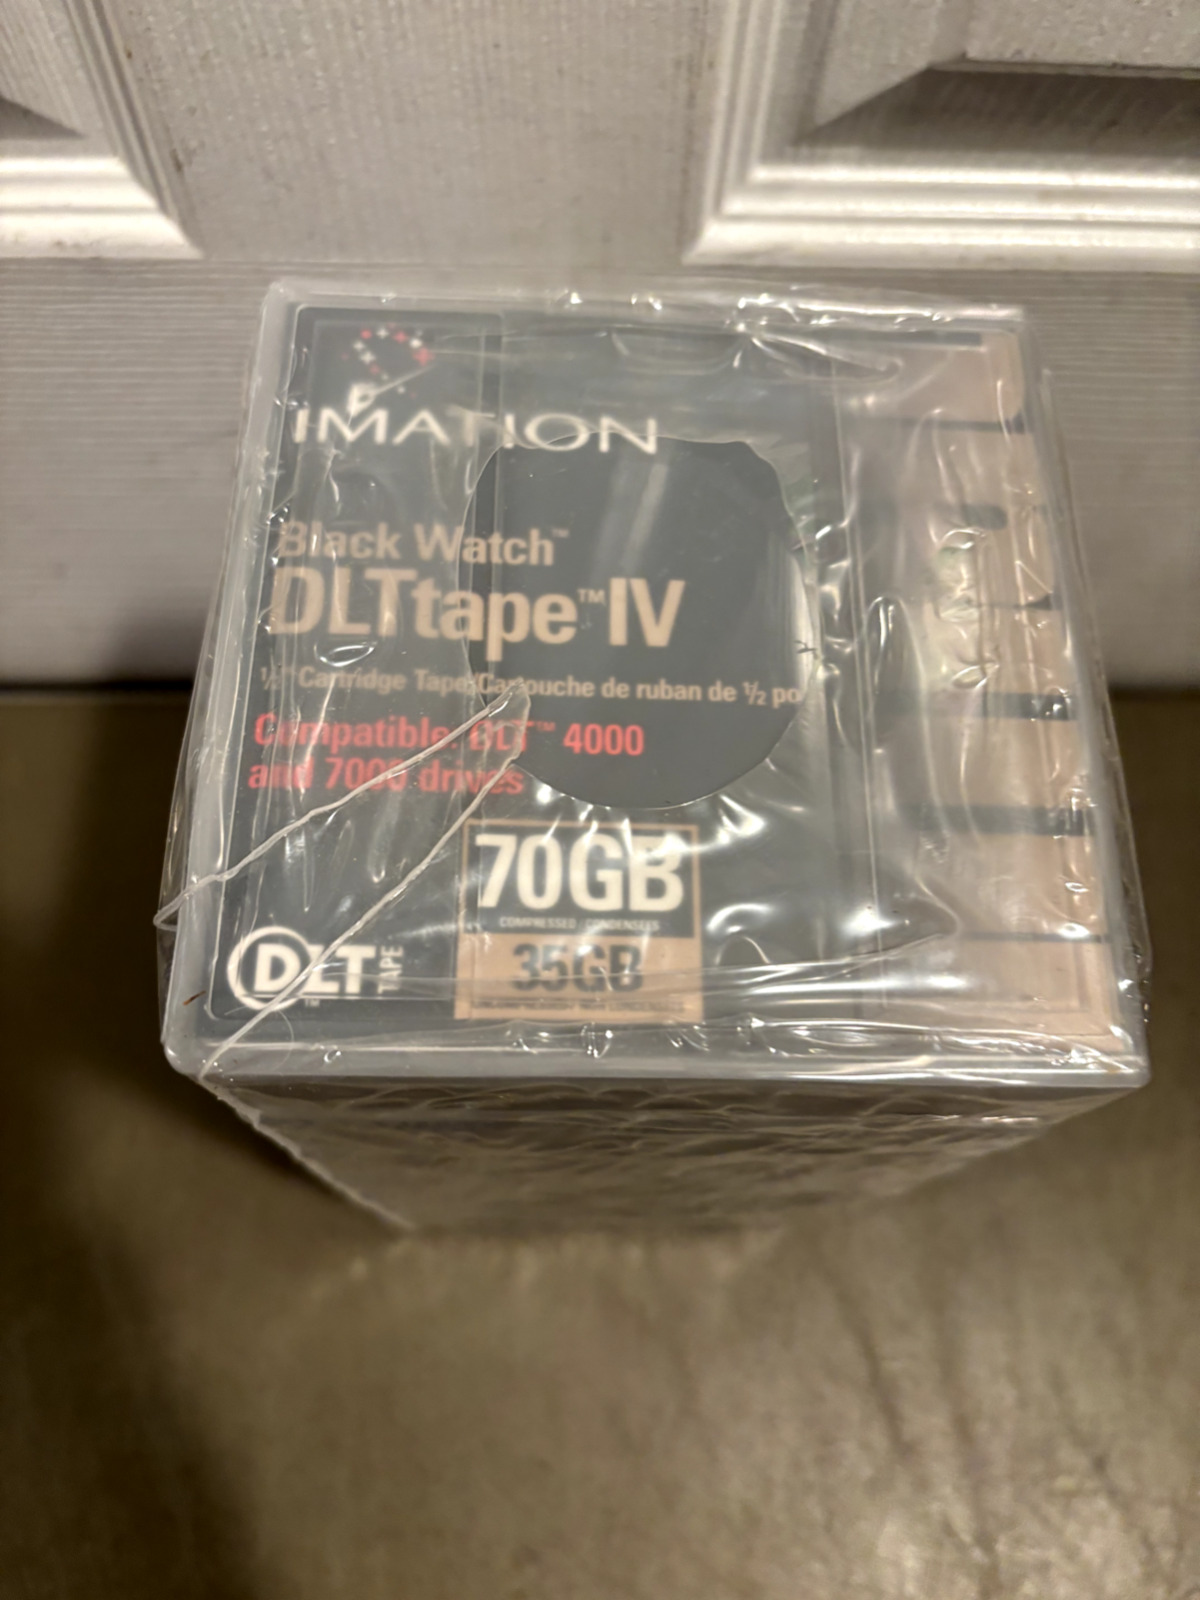 Lot of 7 Imation Black Watch DLTTape IV 40GB/80GB Data Tape Cartridge